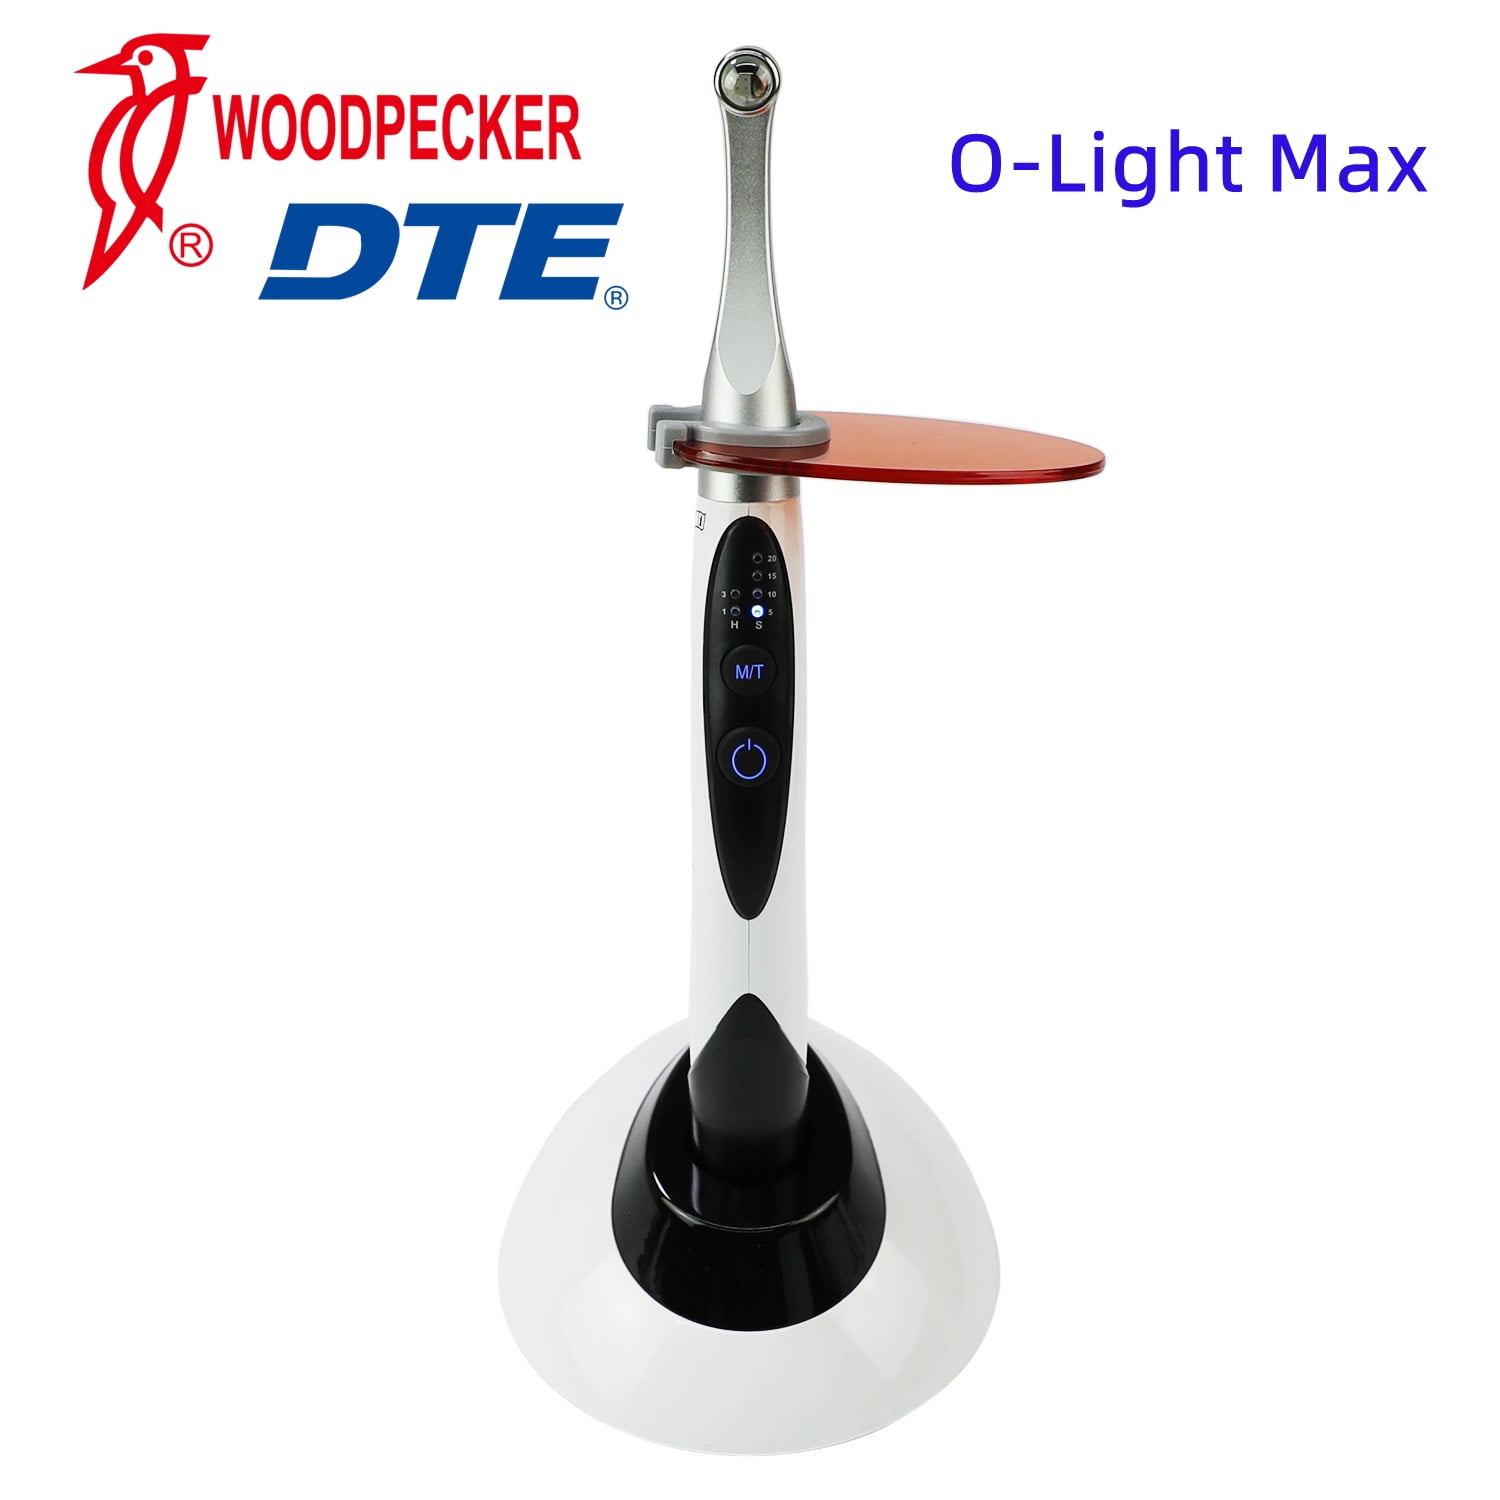 Fruity solid i aften Woodpecker DTE O-Light Max Dental LED Curing Light 1 Sec Cure Lamp Wide  Spectrum Metal Head, 1 Yearranty - Walmart.com